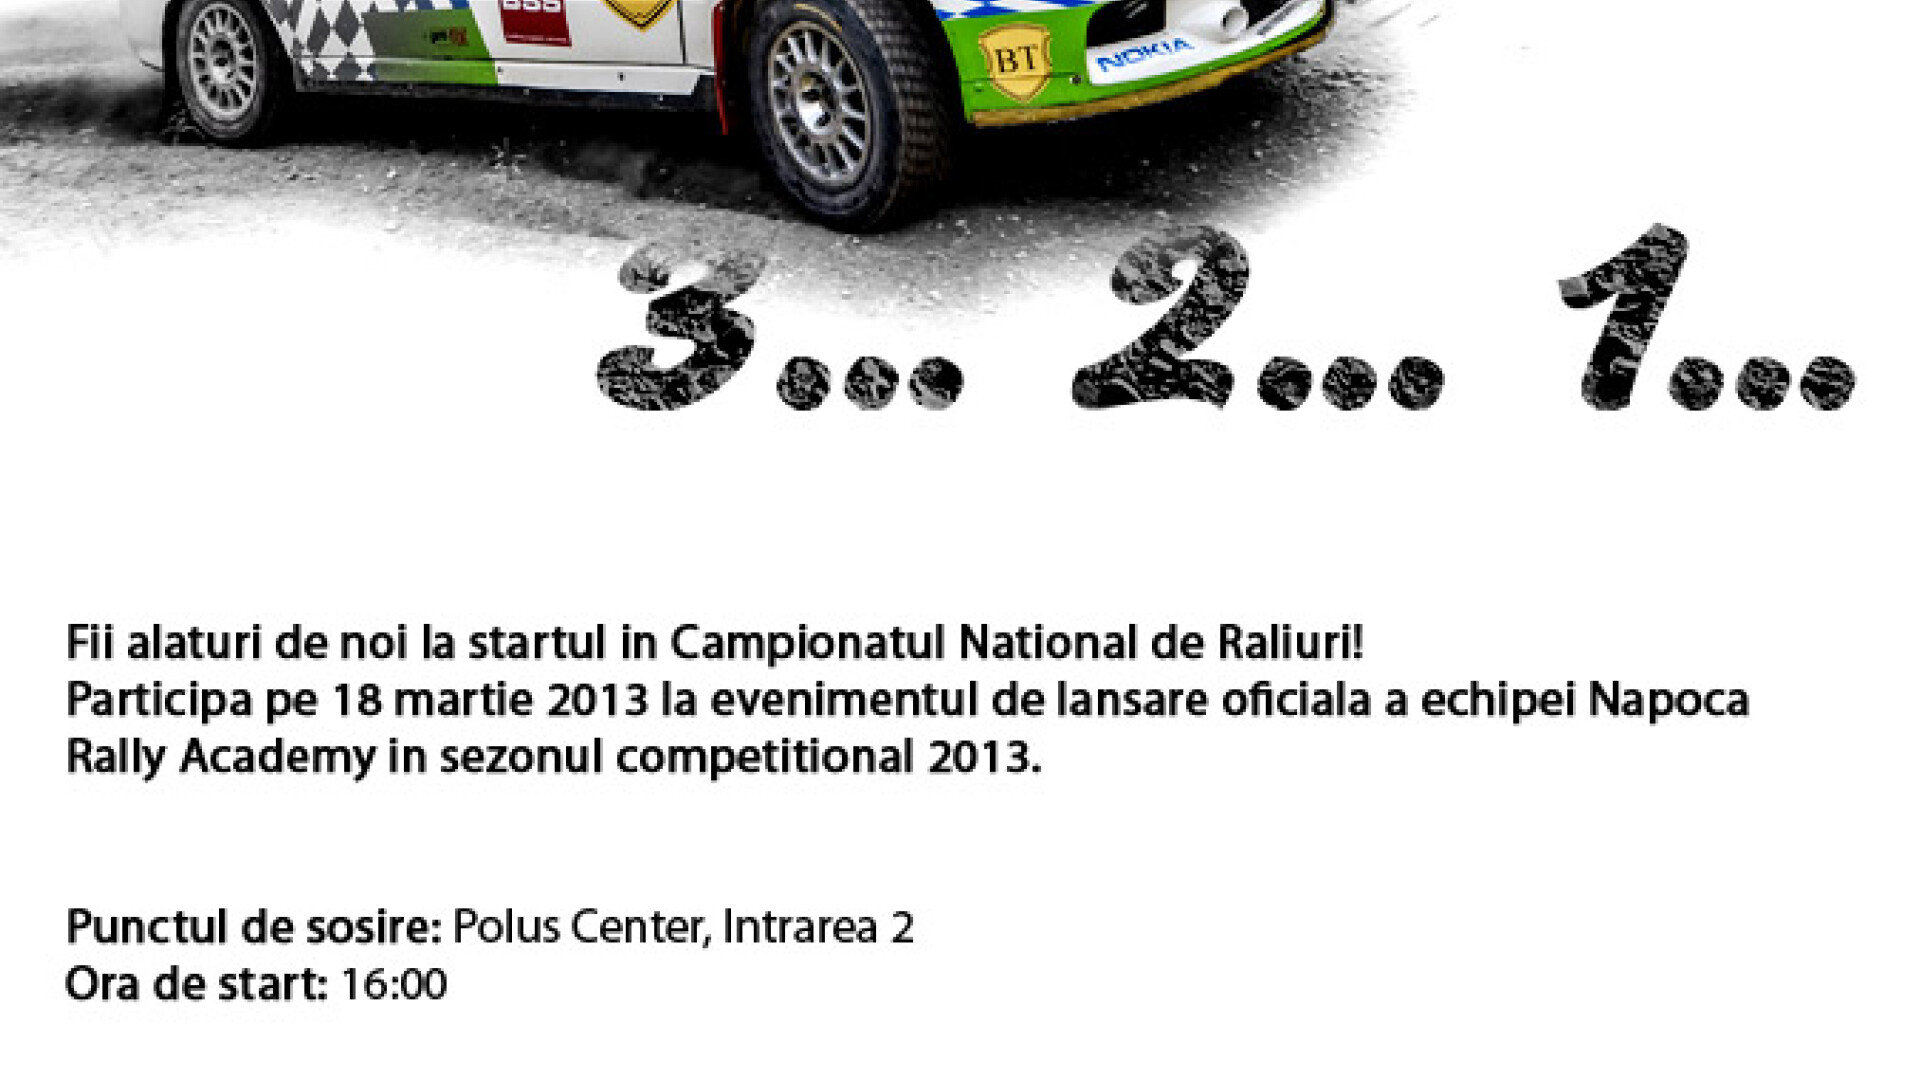 Pilotii Napoca Rally Academy isi prezinta echipajele pentru sezonul competitional 2013